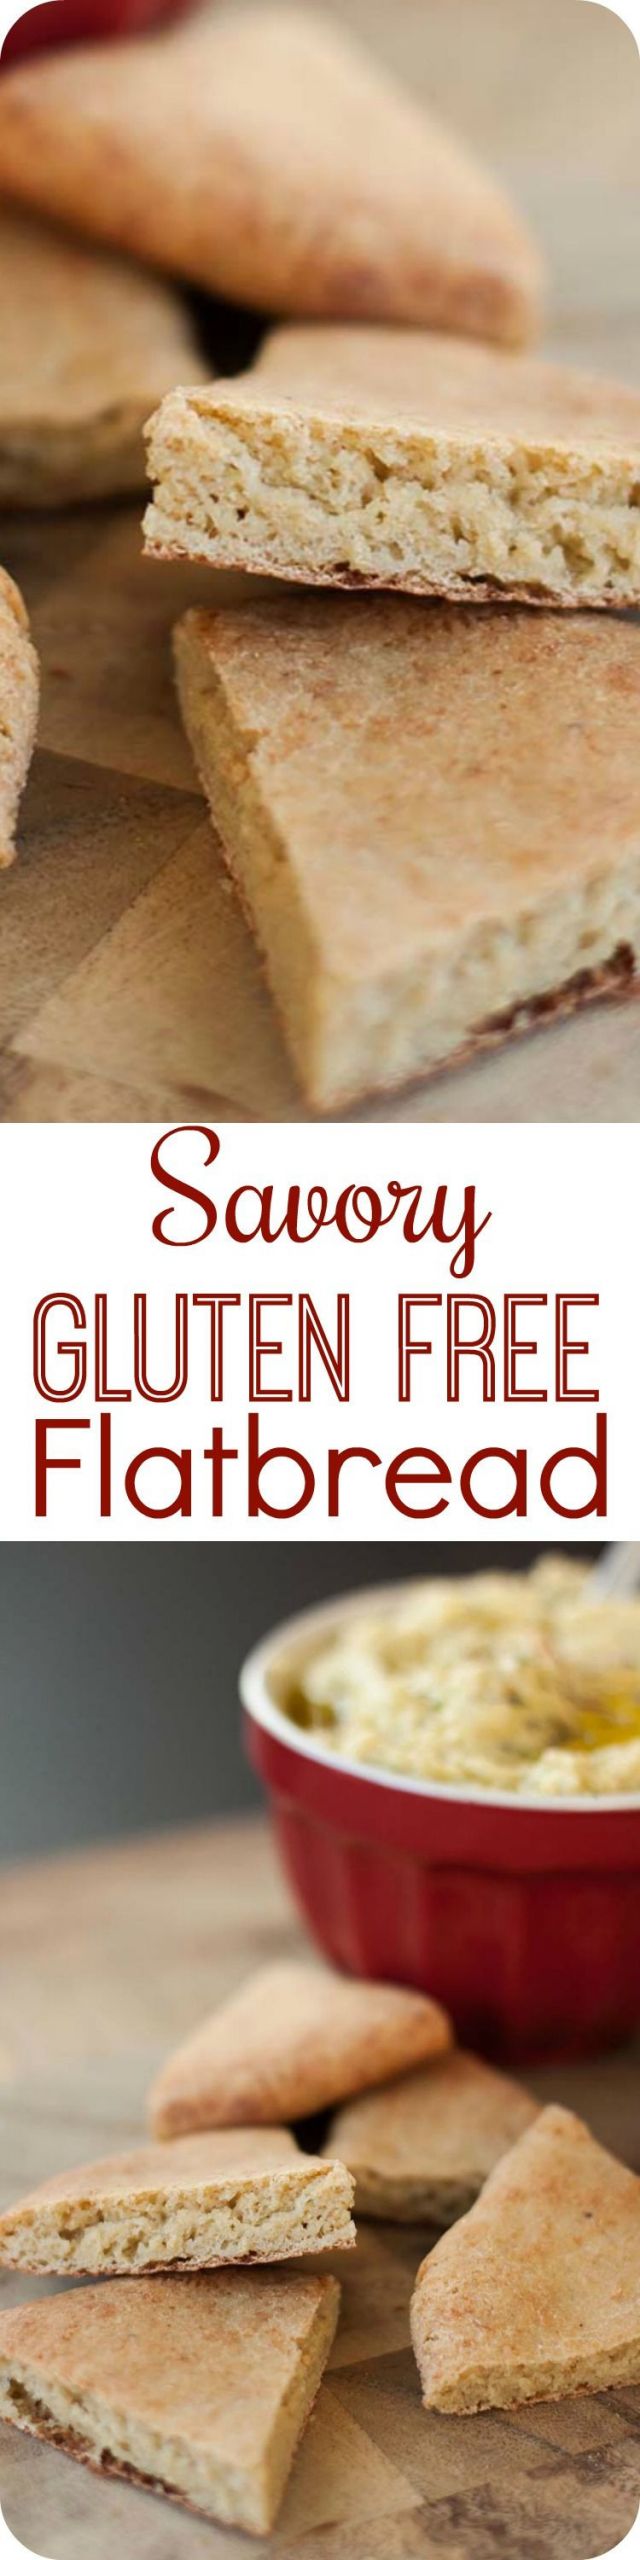 Gluten Free Flatbread Recipes
 